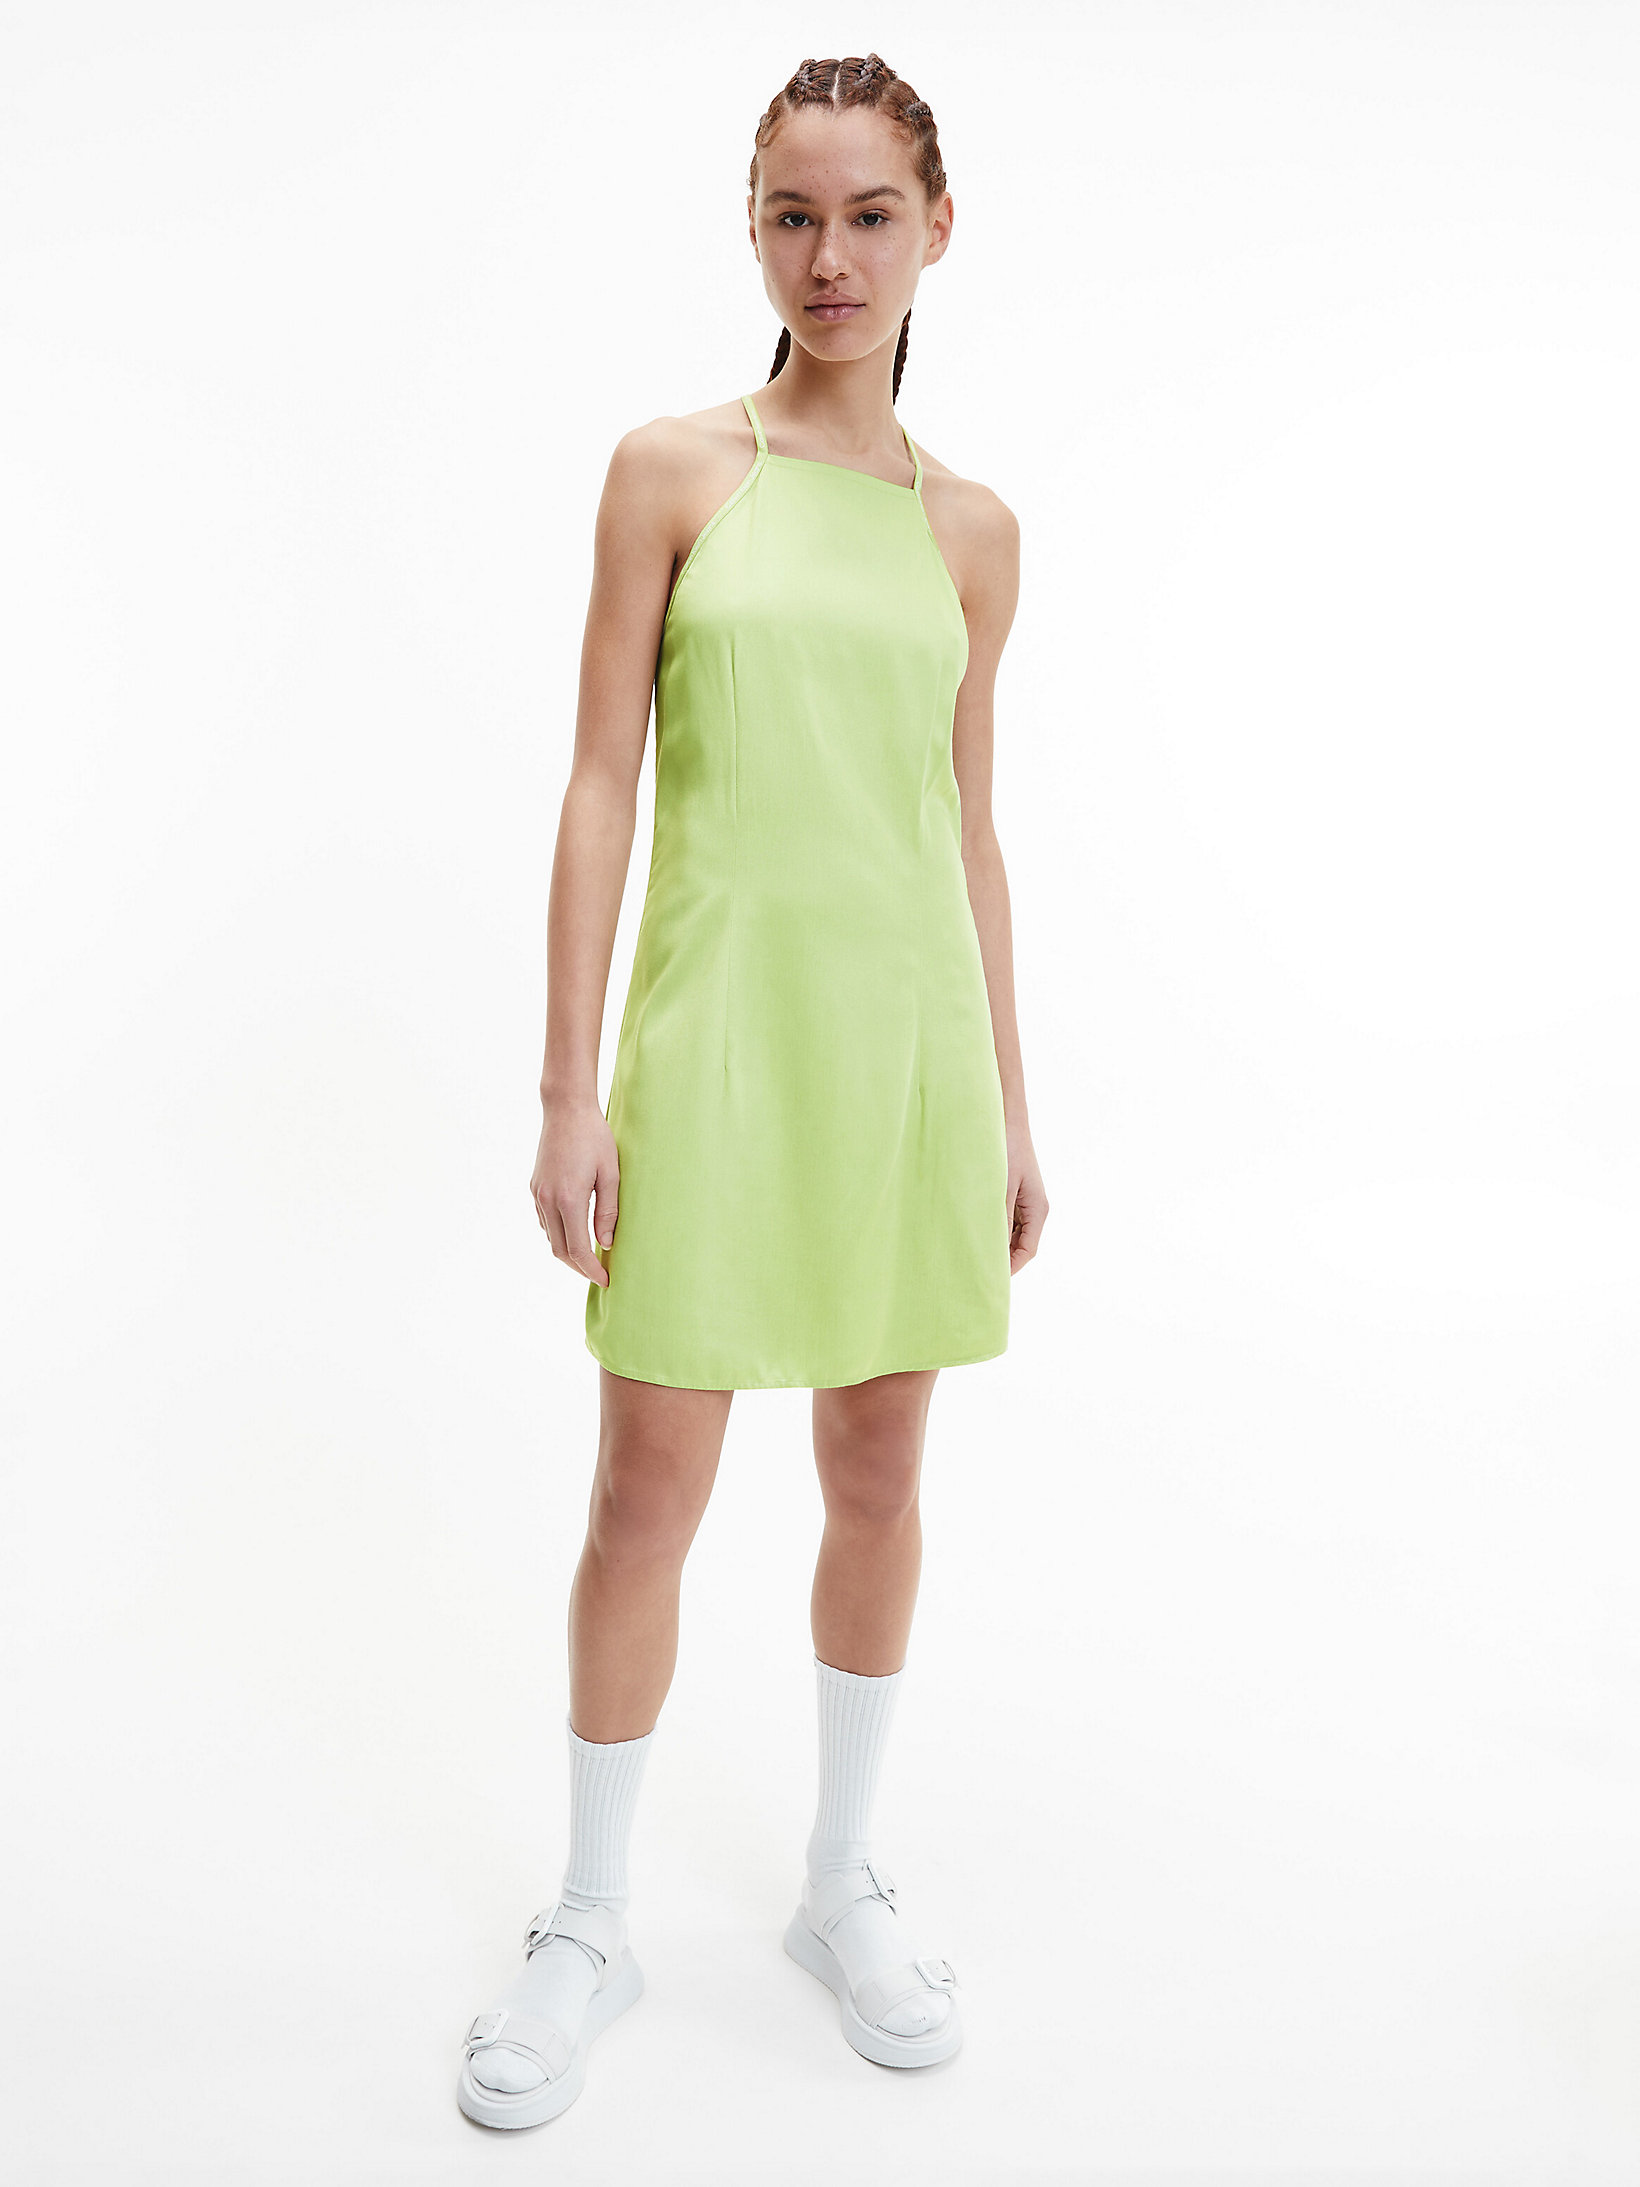 Jaded Green Repeat Logo Strappy Dress undefined women Calvin Klein